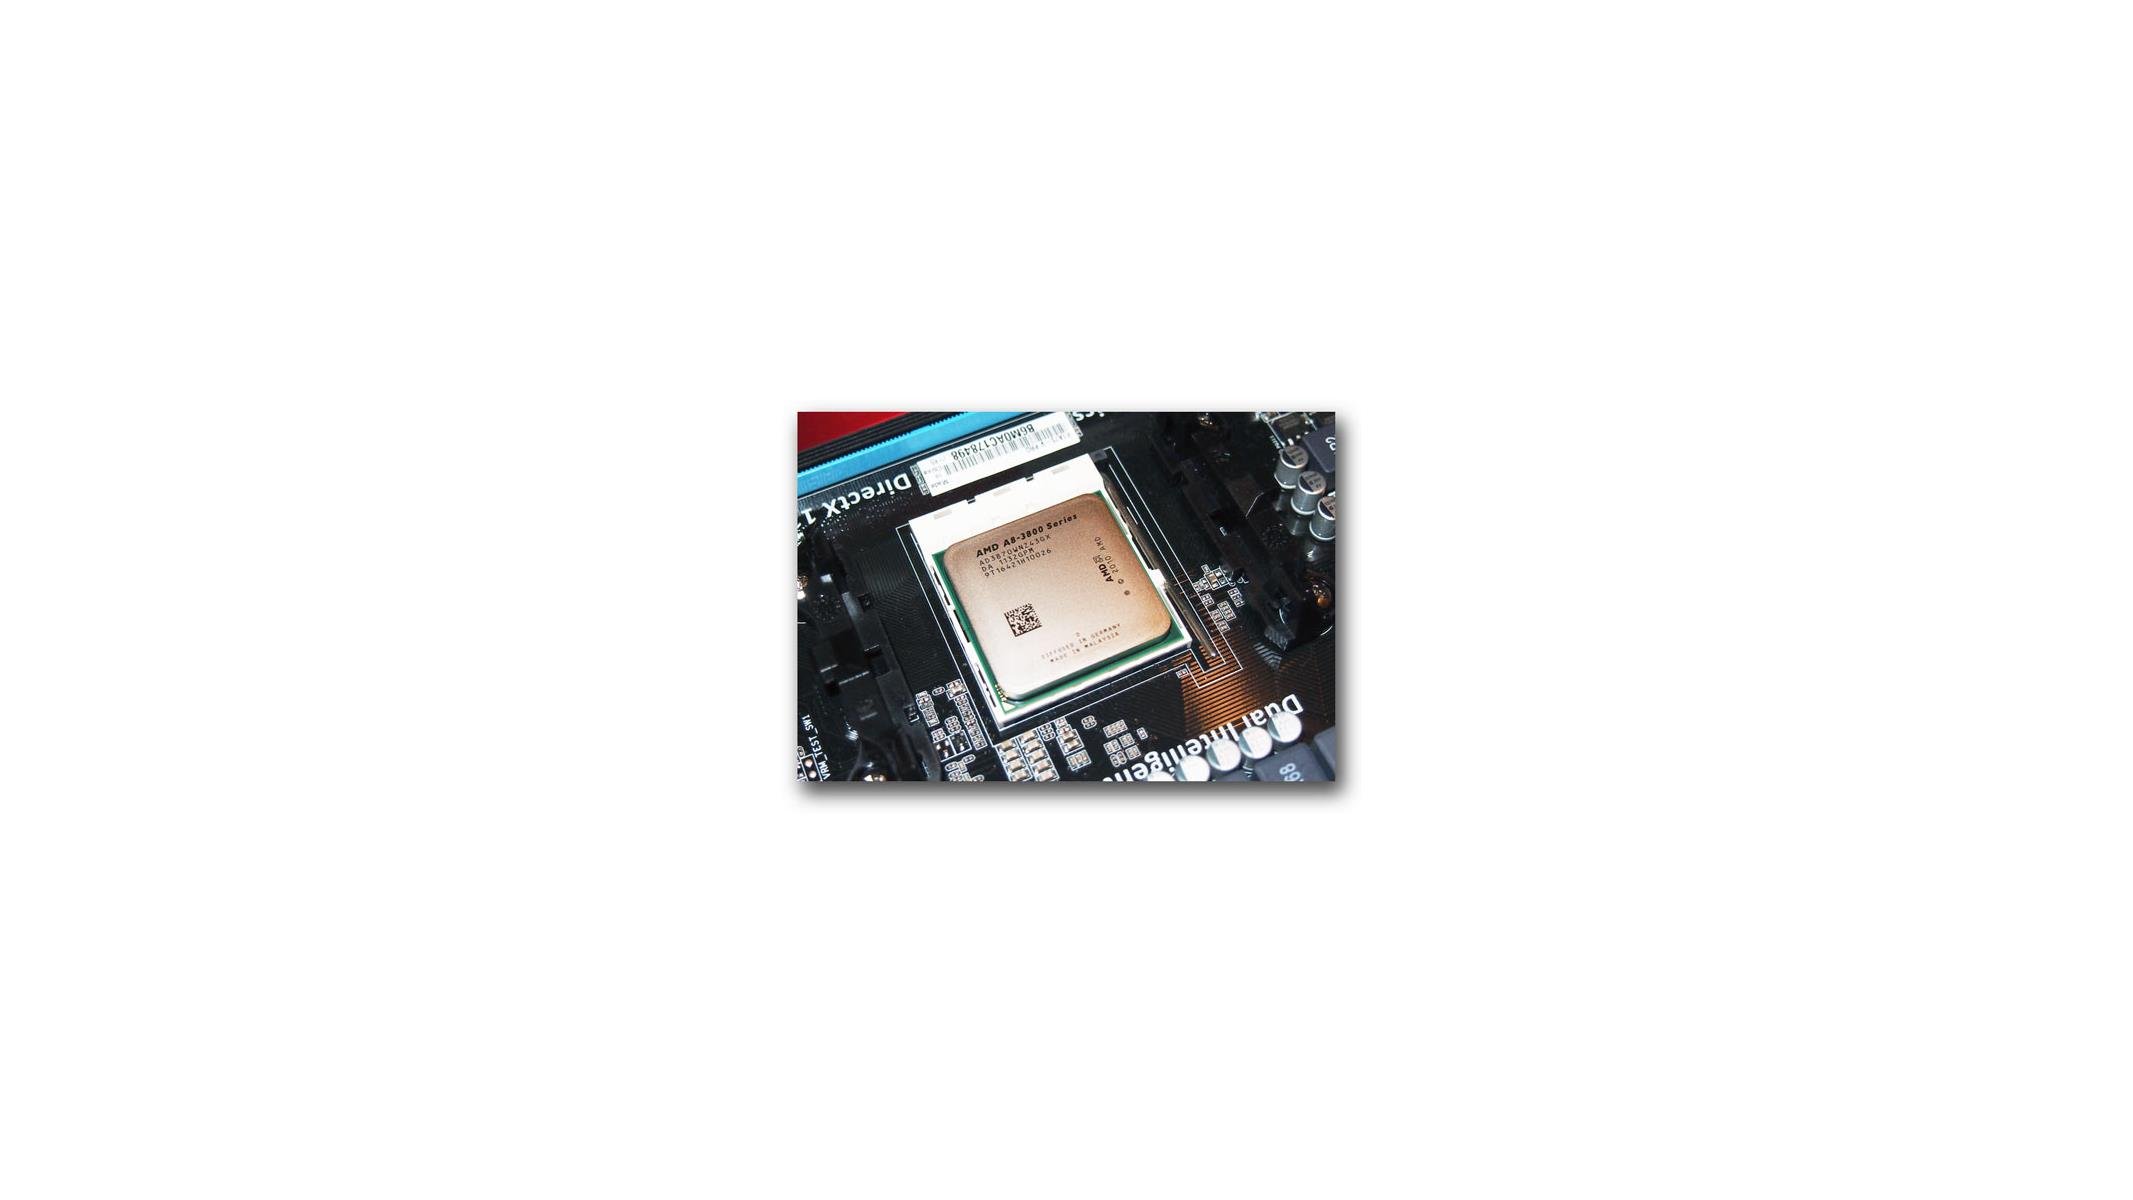 Amd A8 3870k Unlocked Llano Quad Core Apu Review Hothardware